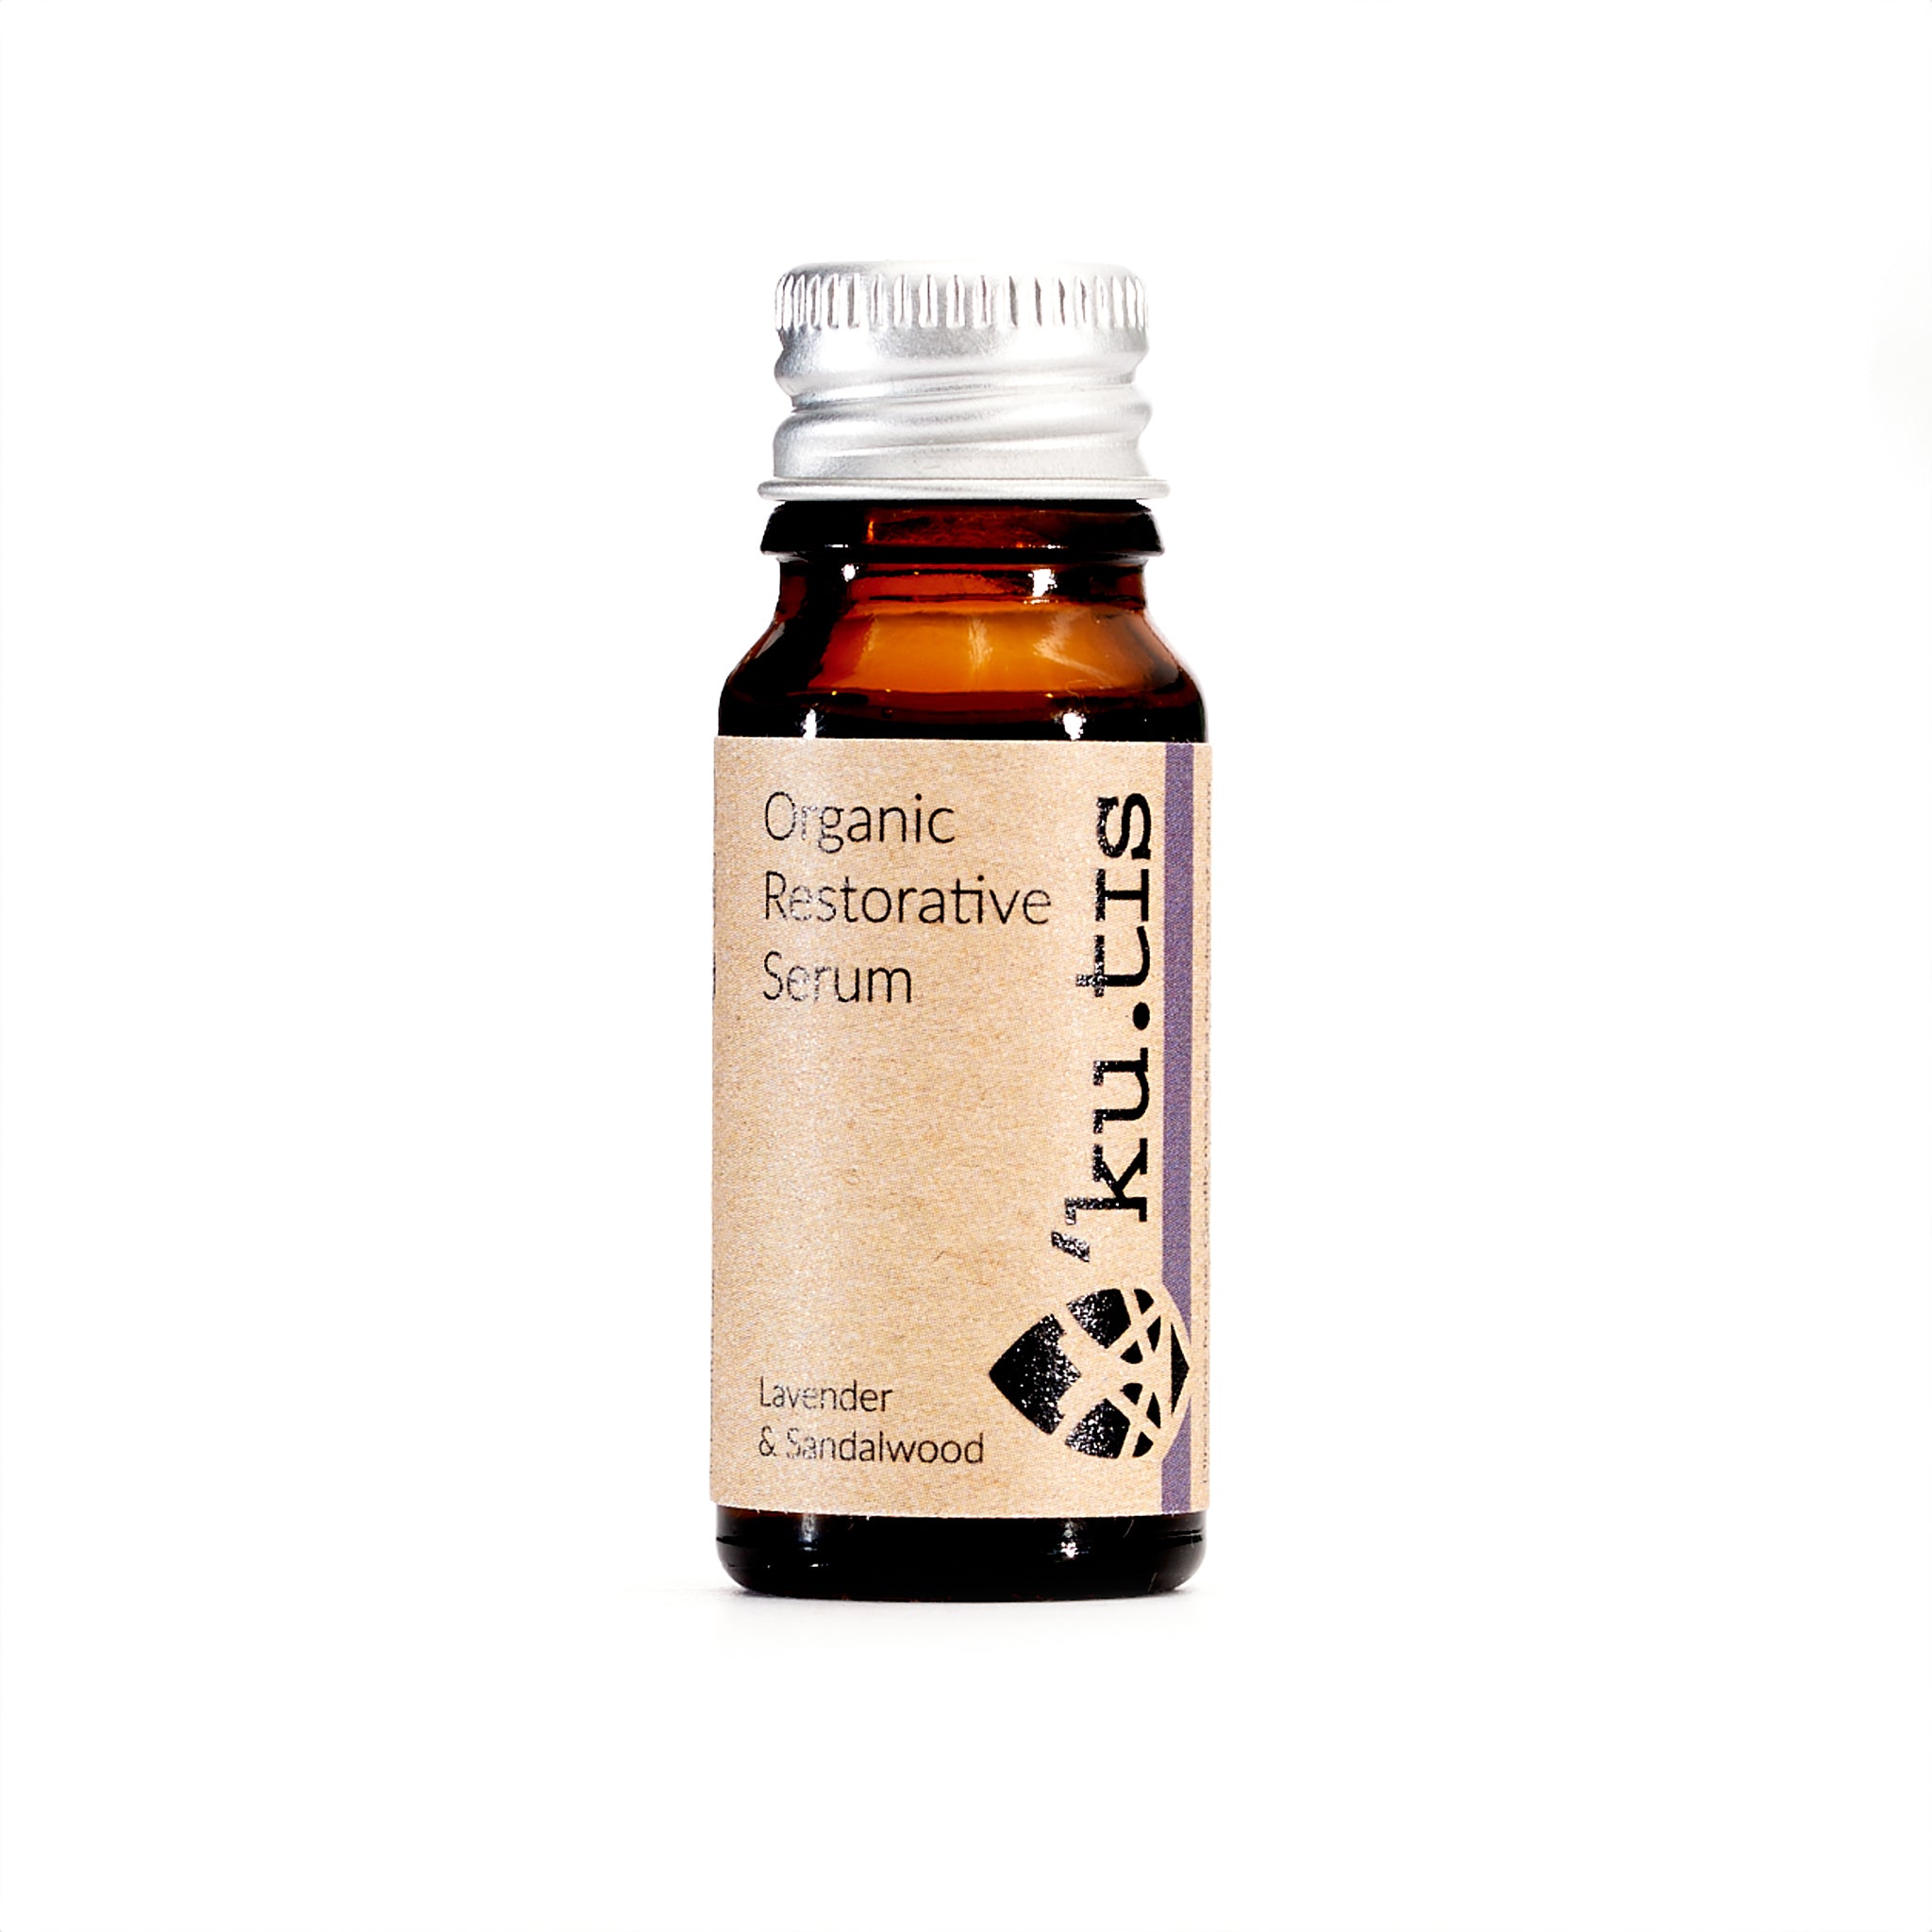 Natural organic restorative lavender and sandalwood face oil serum in a glass bottle with aluminium cap